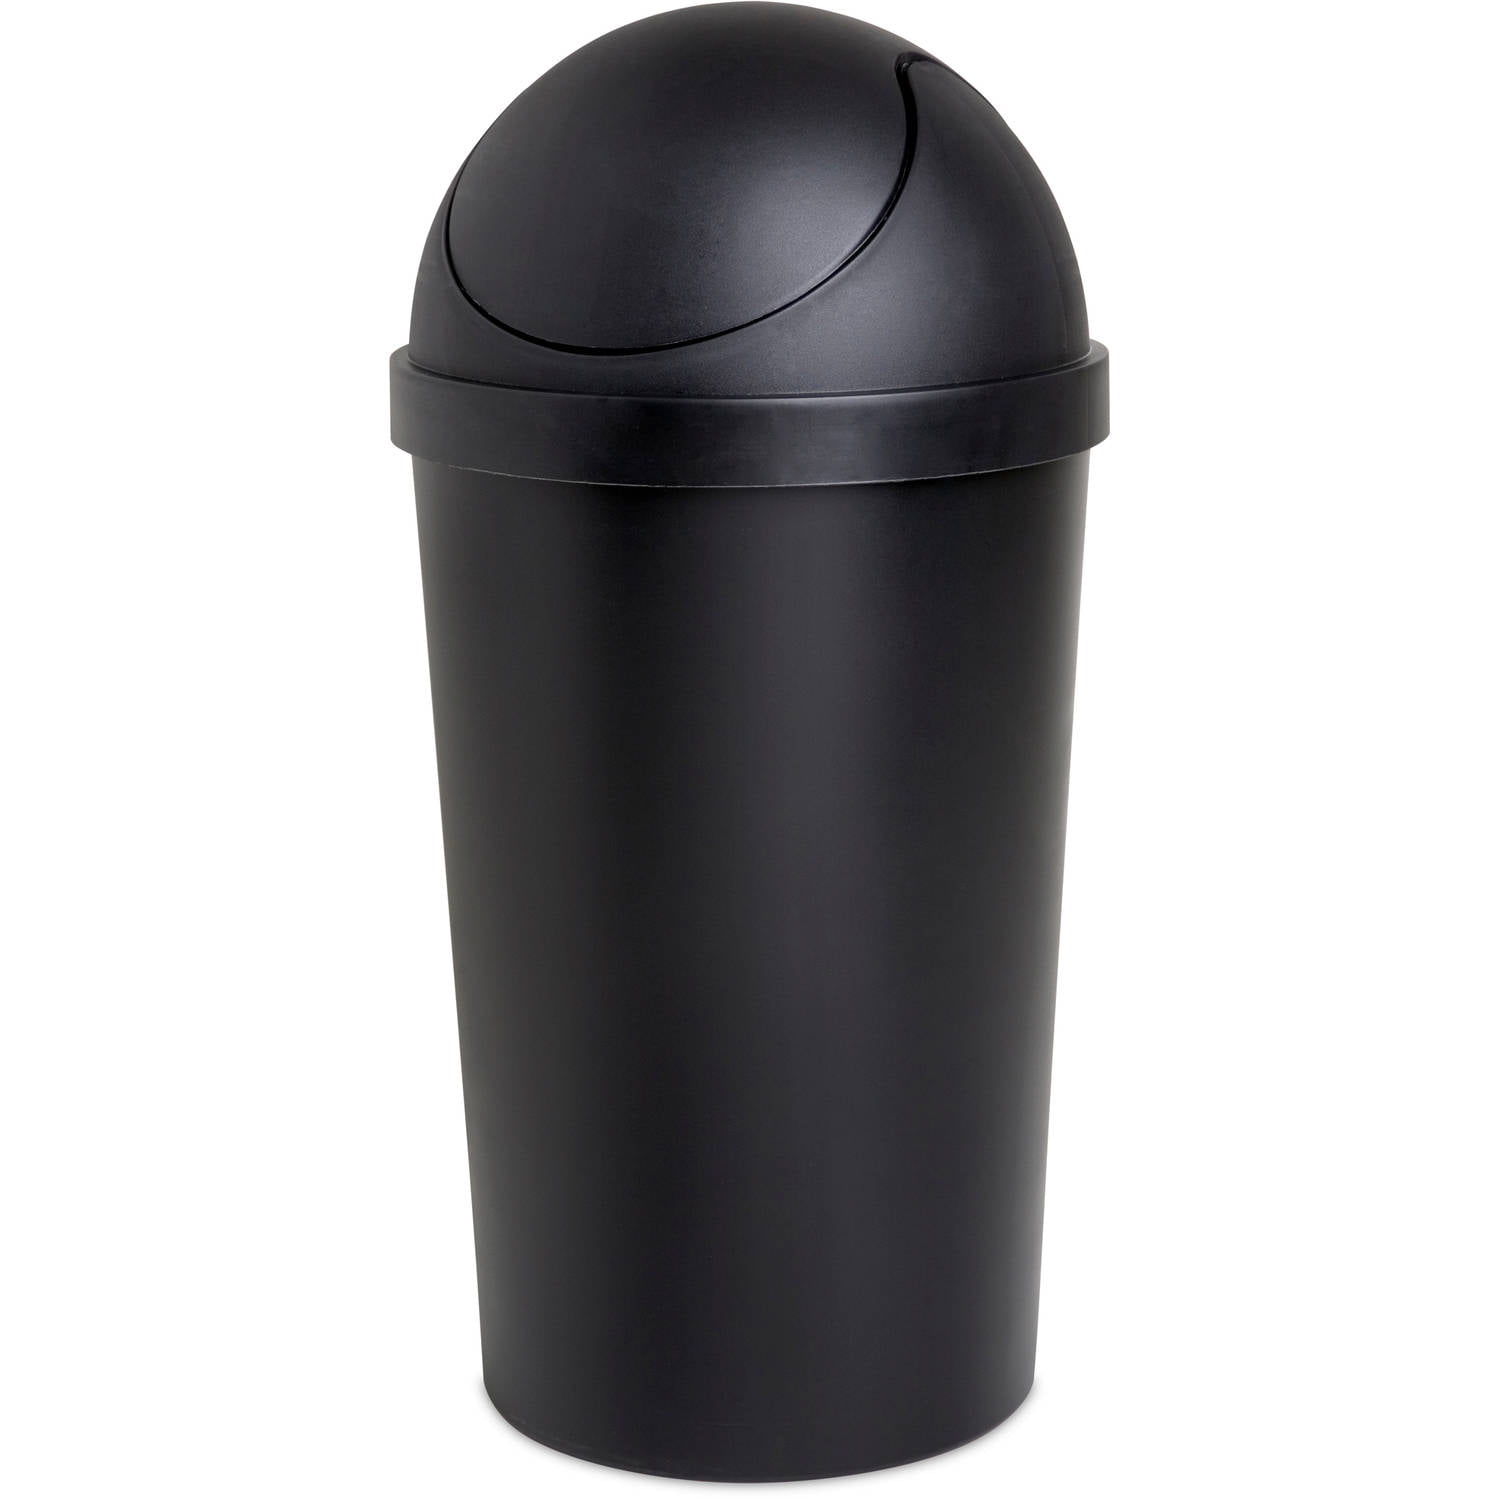 Sterilite 3 Gallon Trash Can, Plastic Round Swing Top Bathroom Trash Can, Black